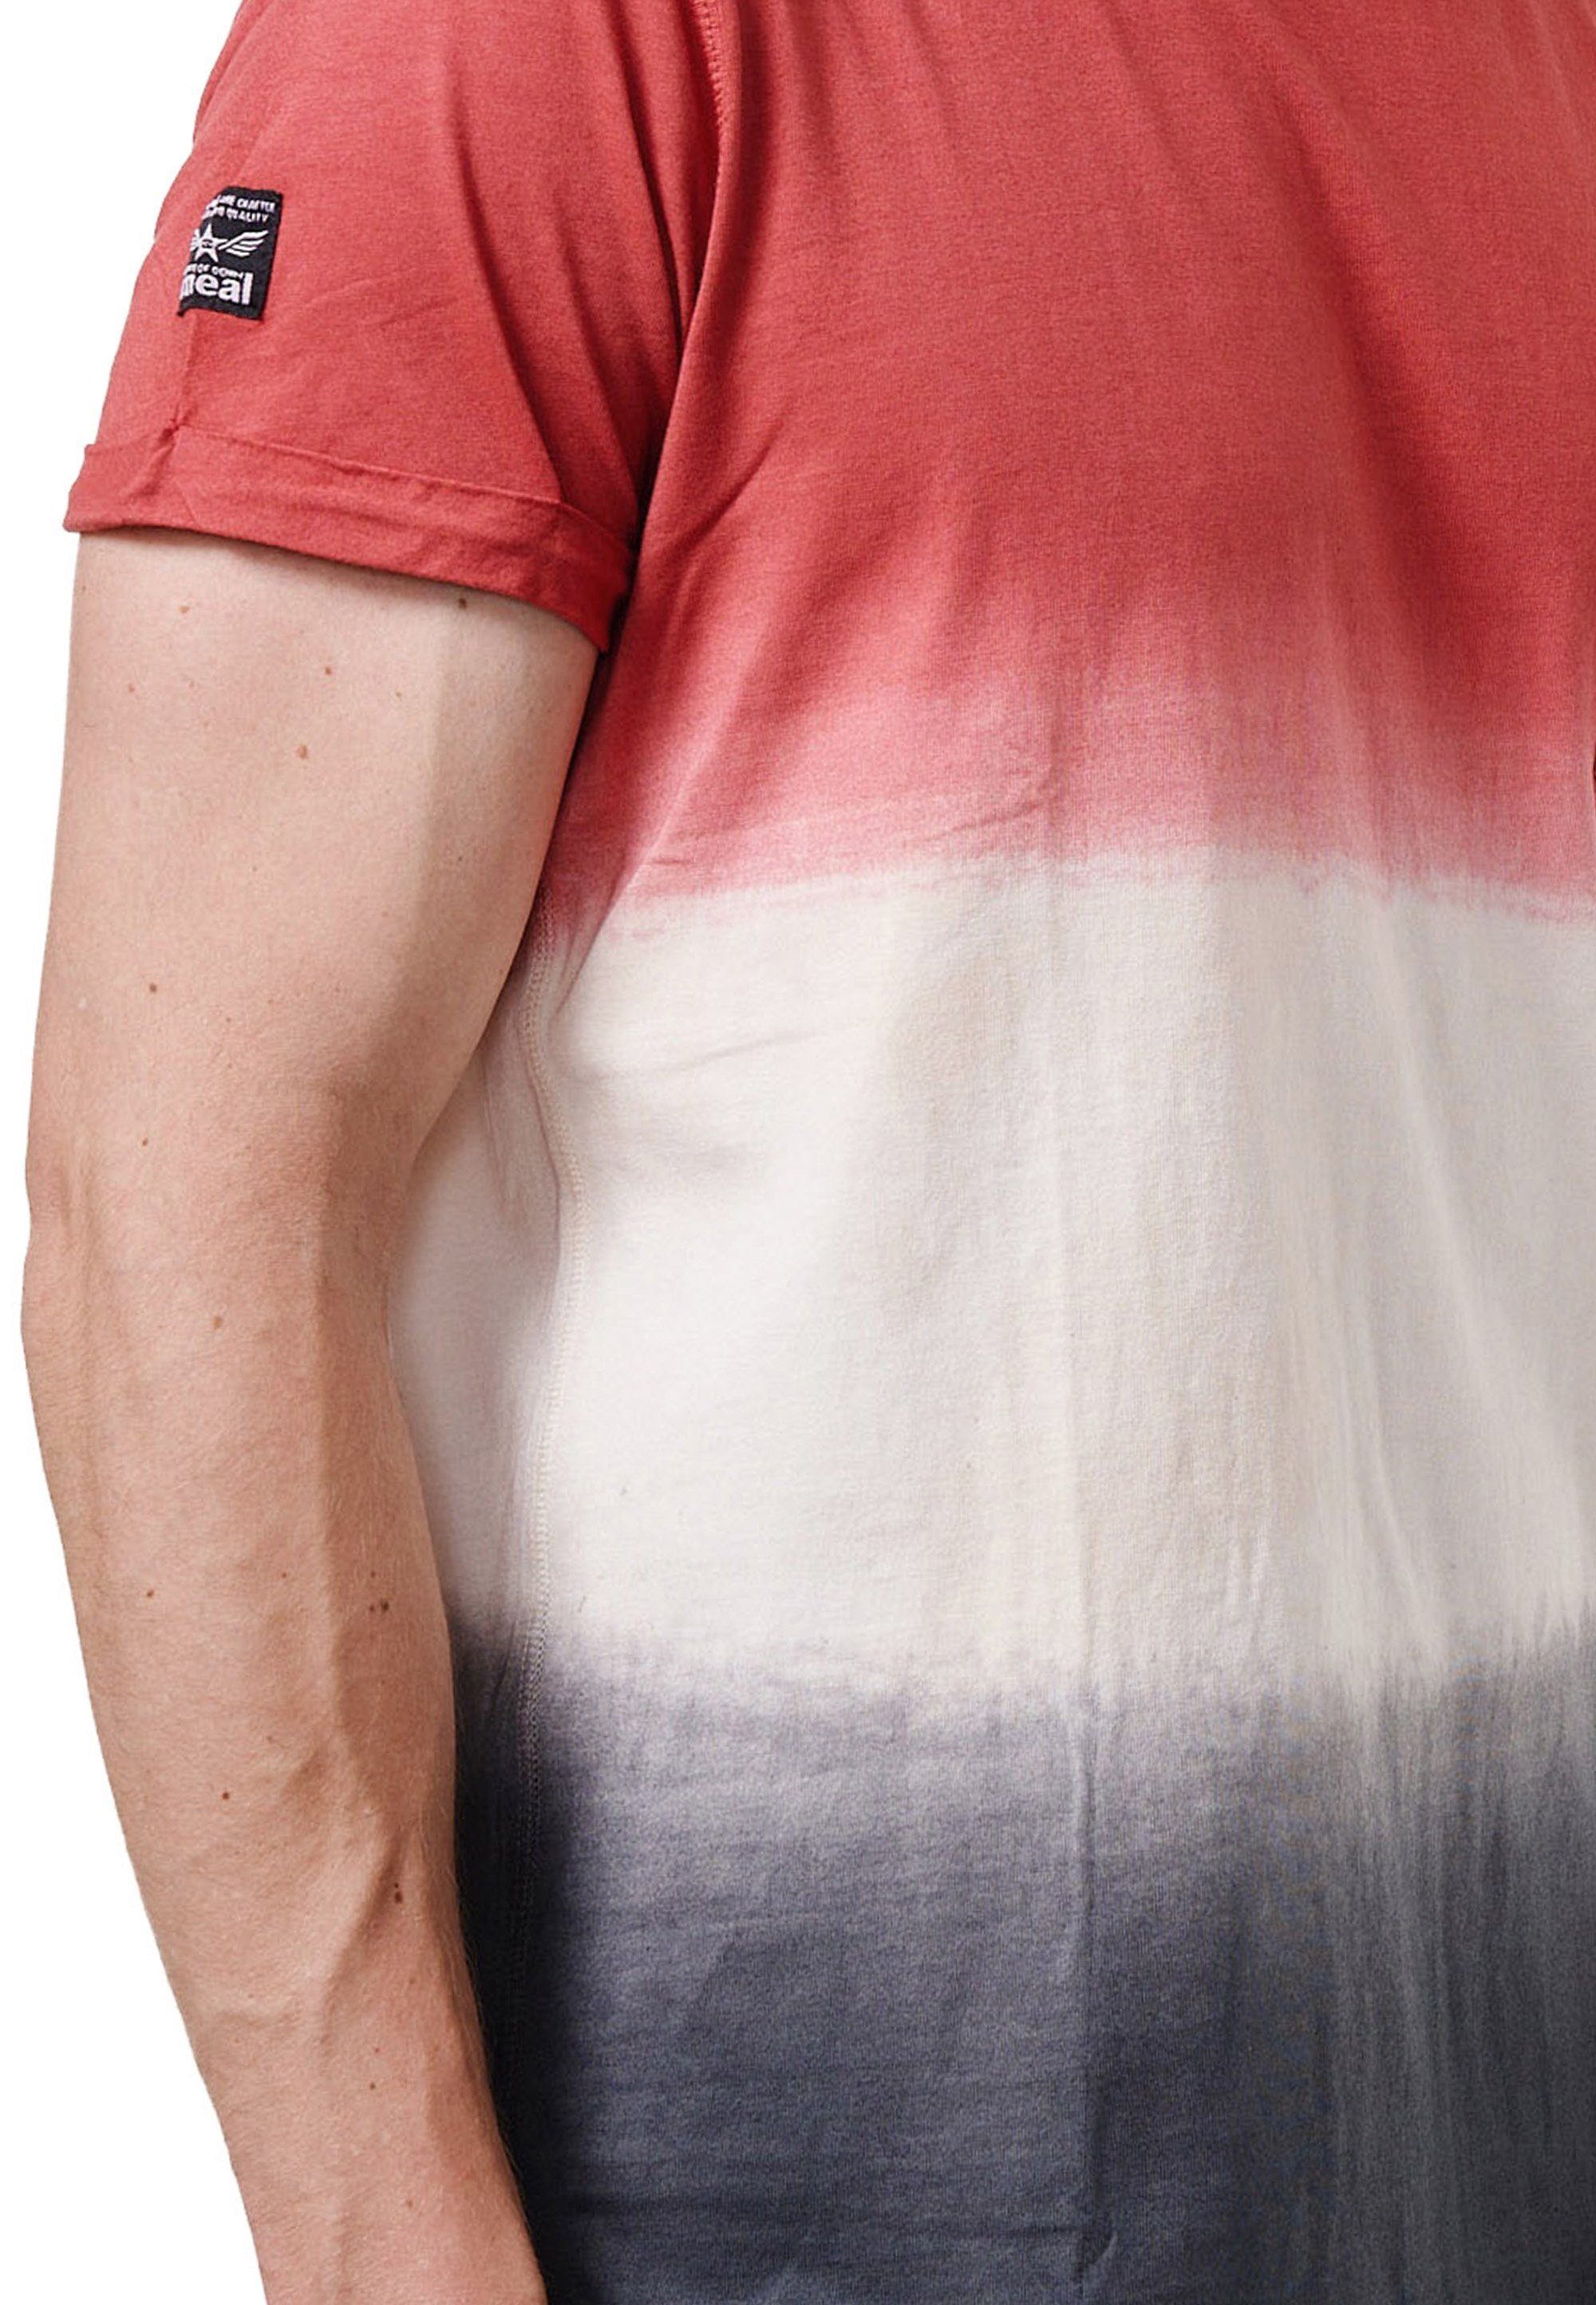 Rusty Neal T-Shirt in toller rot-mehrfarbig Used-Optik